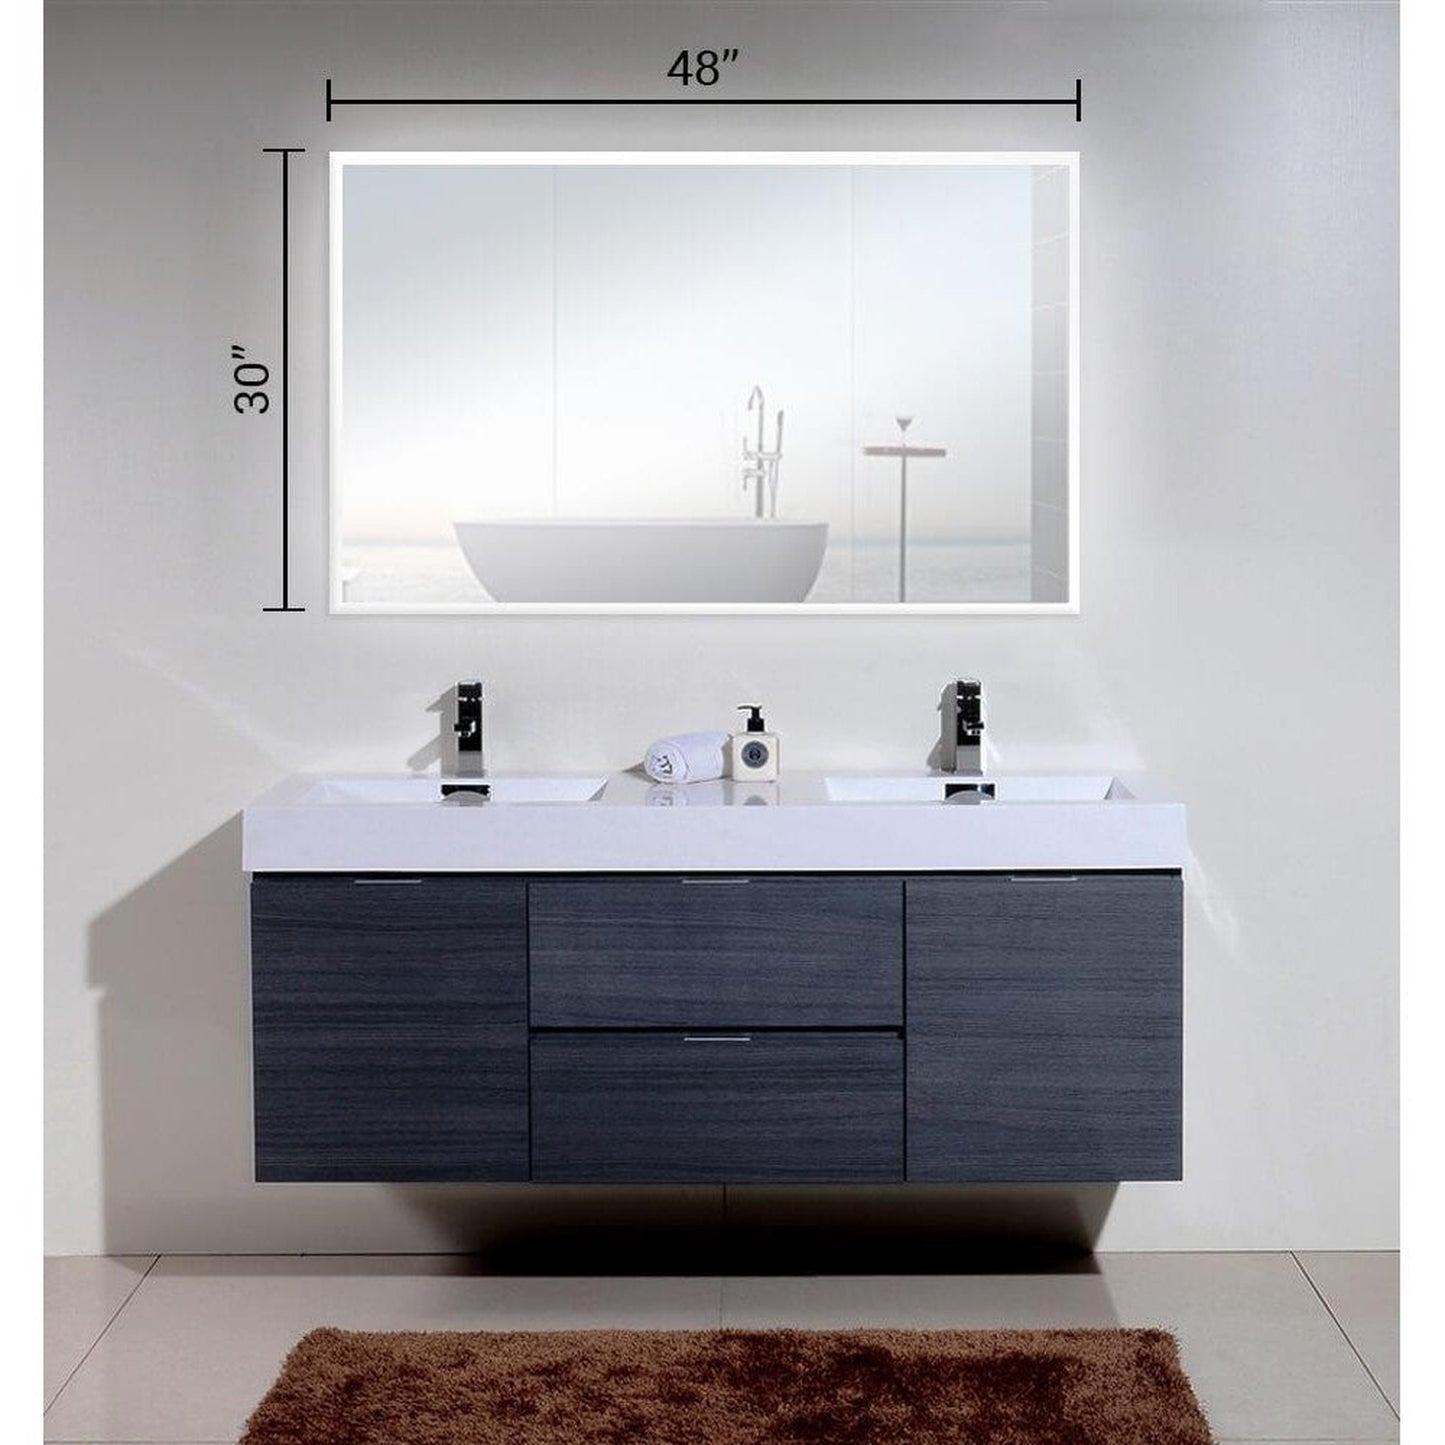 Castello USA Lisa 48" x 30" LED Bathroom Mirror With Sensor Button